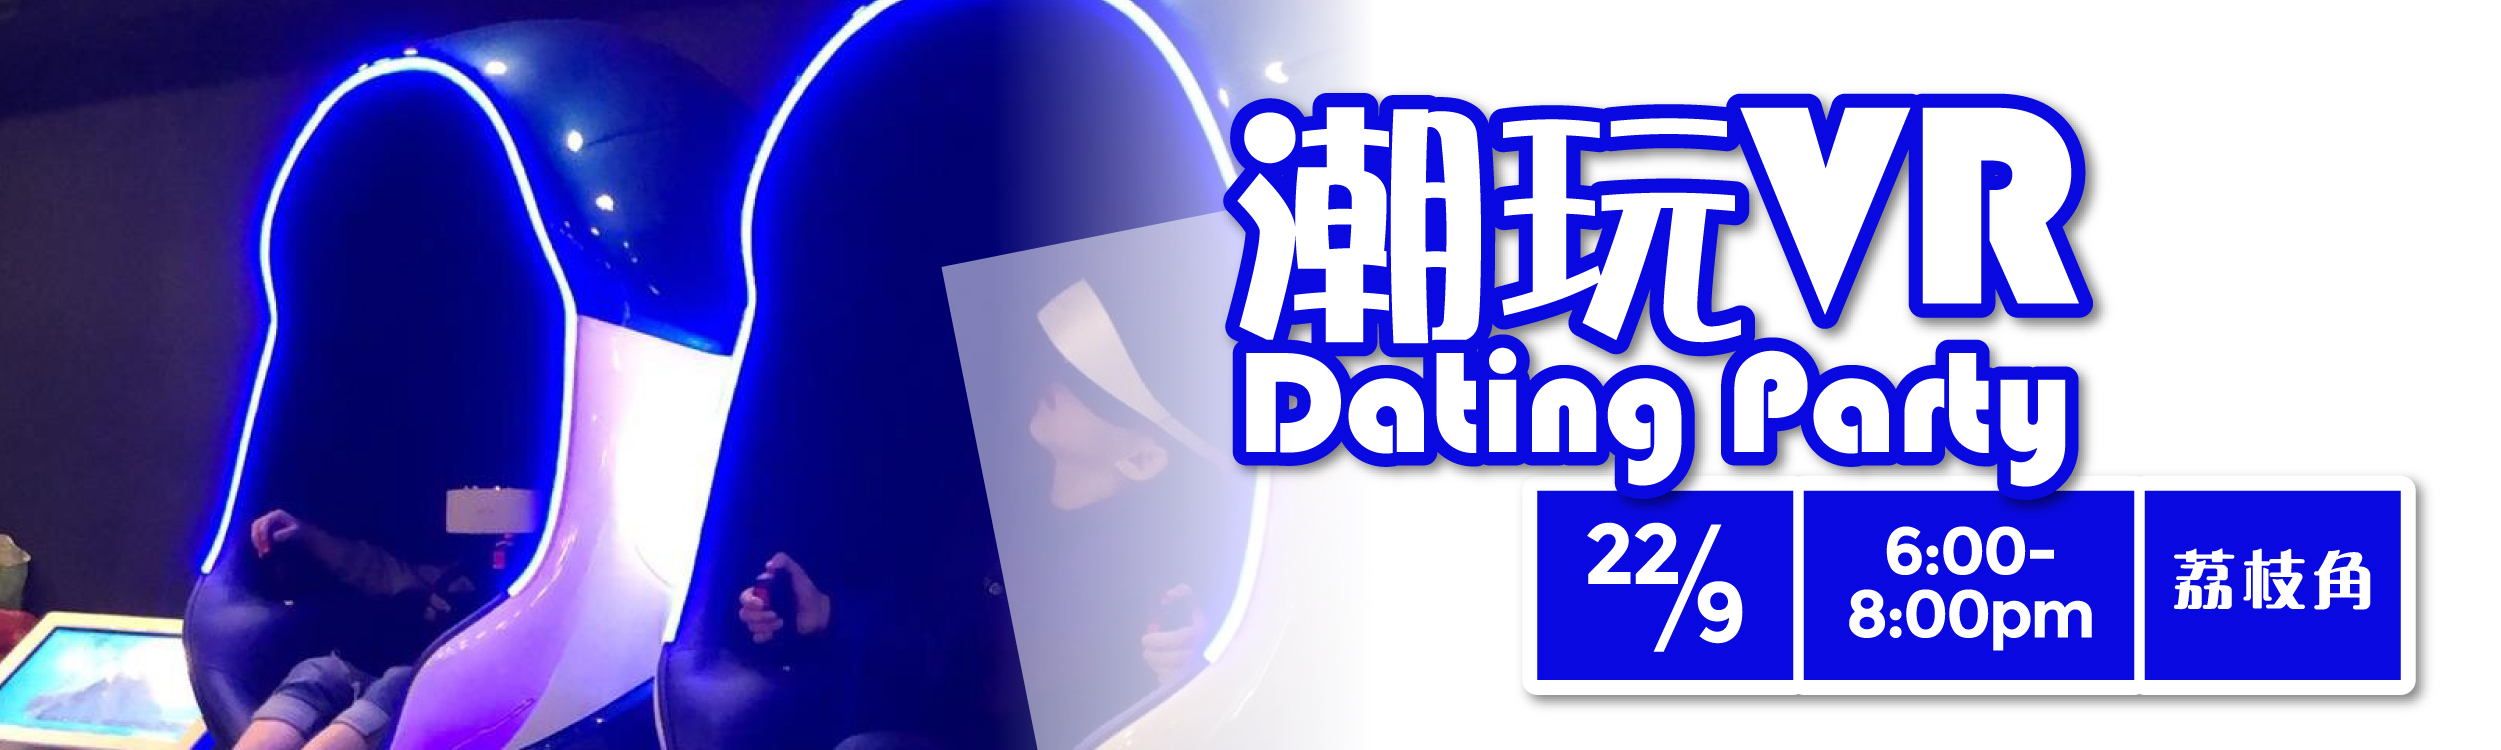 最新Speed Dating約會消息: (完滿舉行)  VR Dating Party